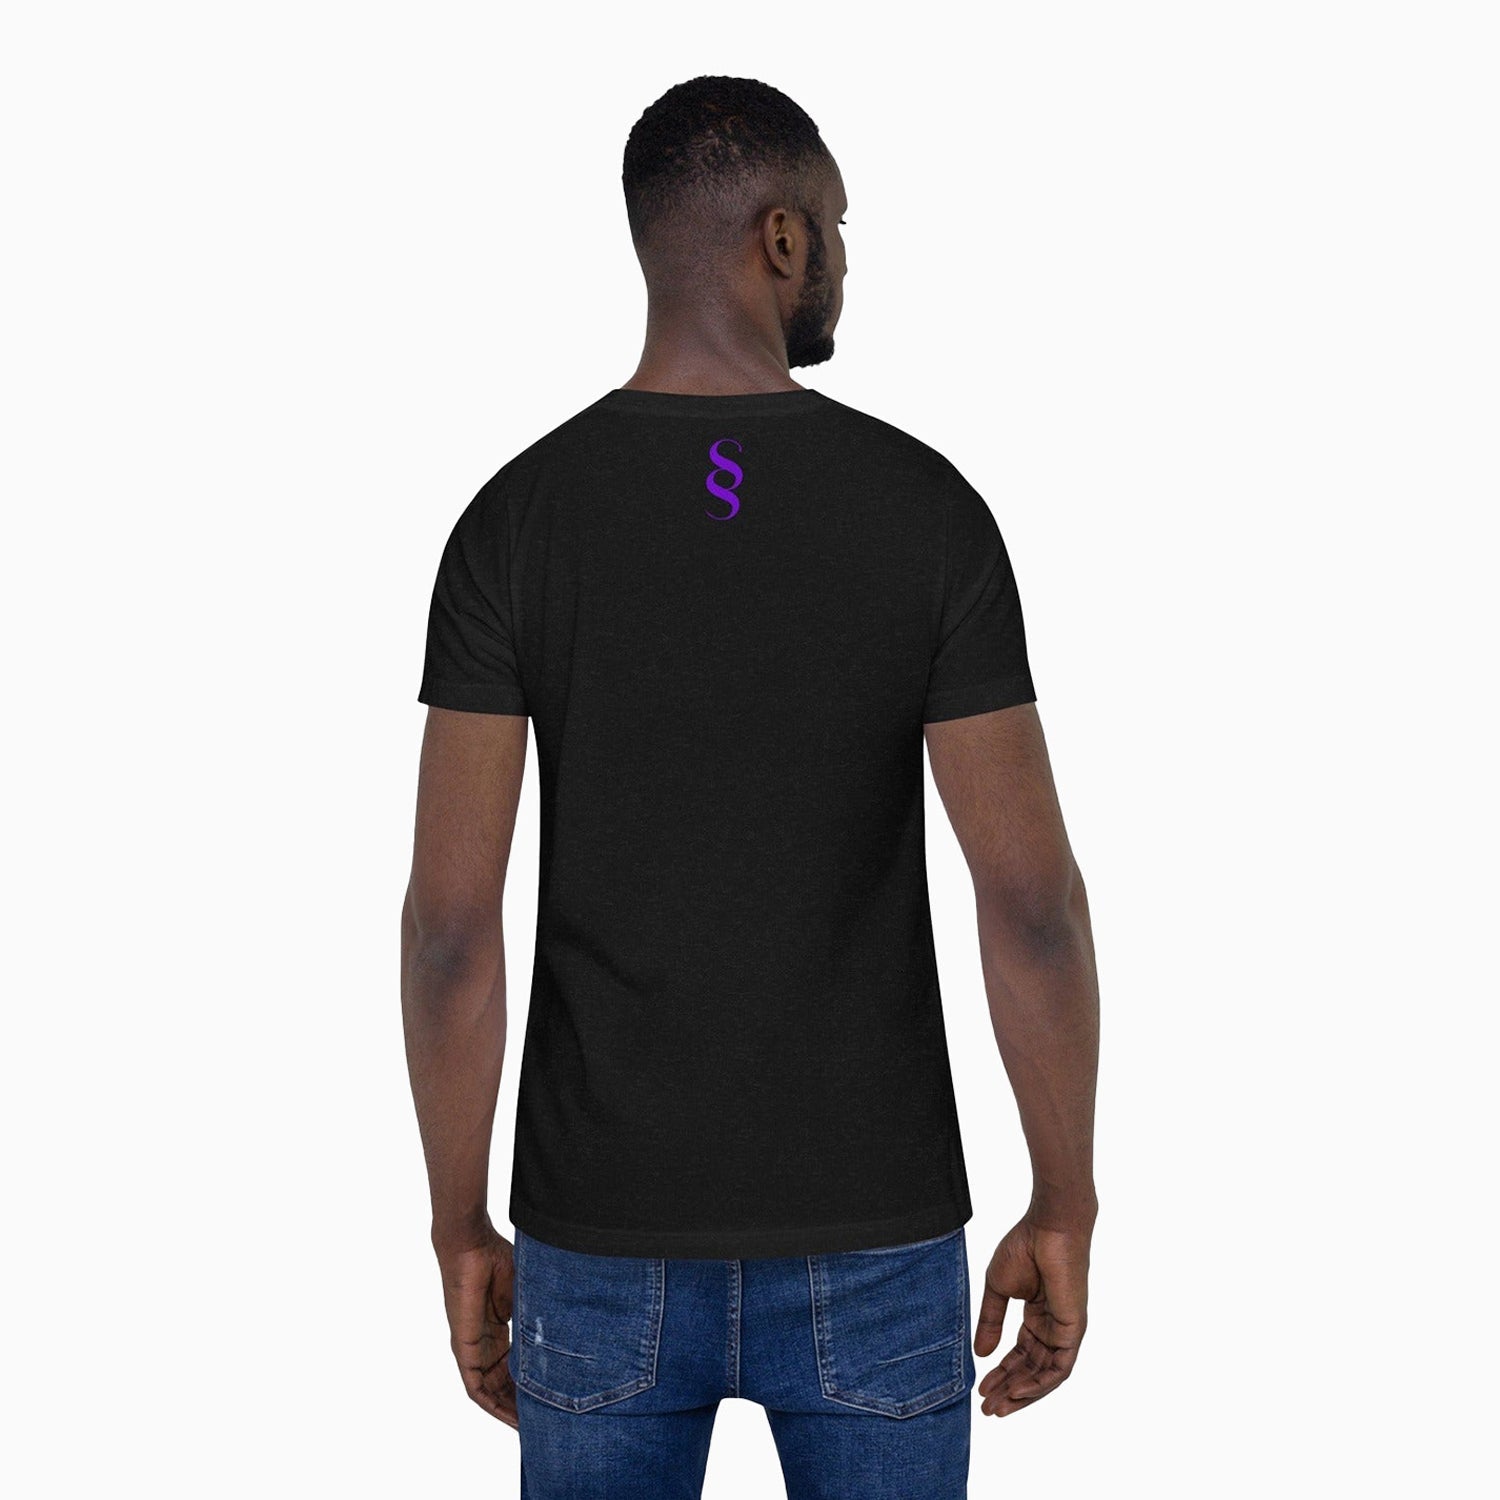 david-design-printed-crew-neck-black-t-shirt-for-men-st109-010